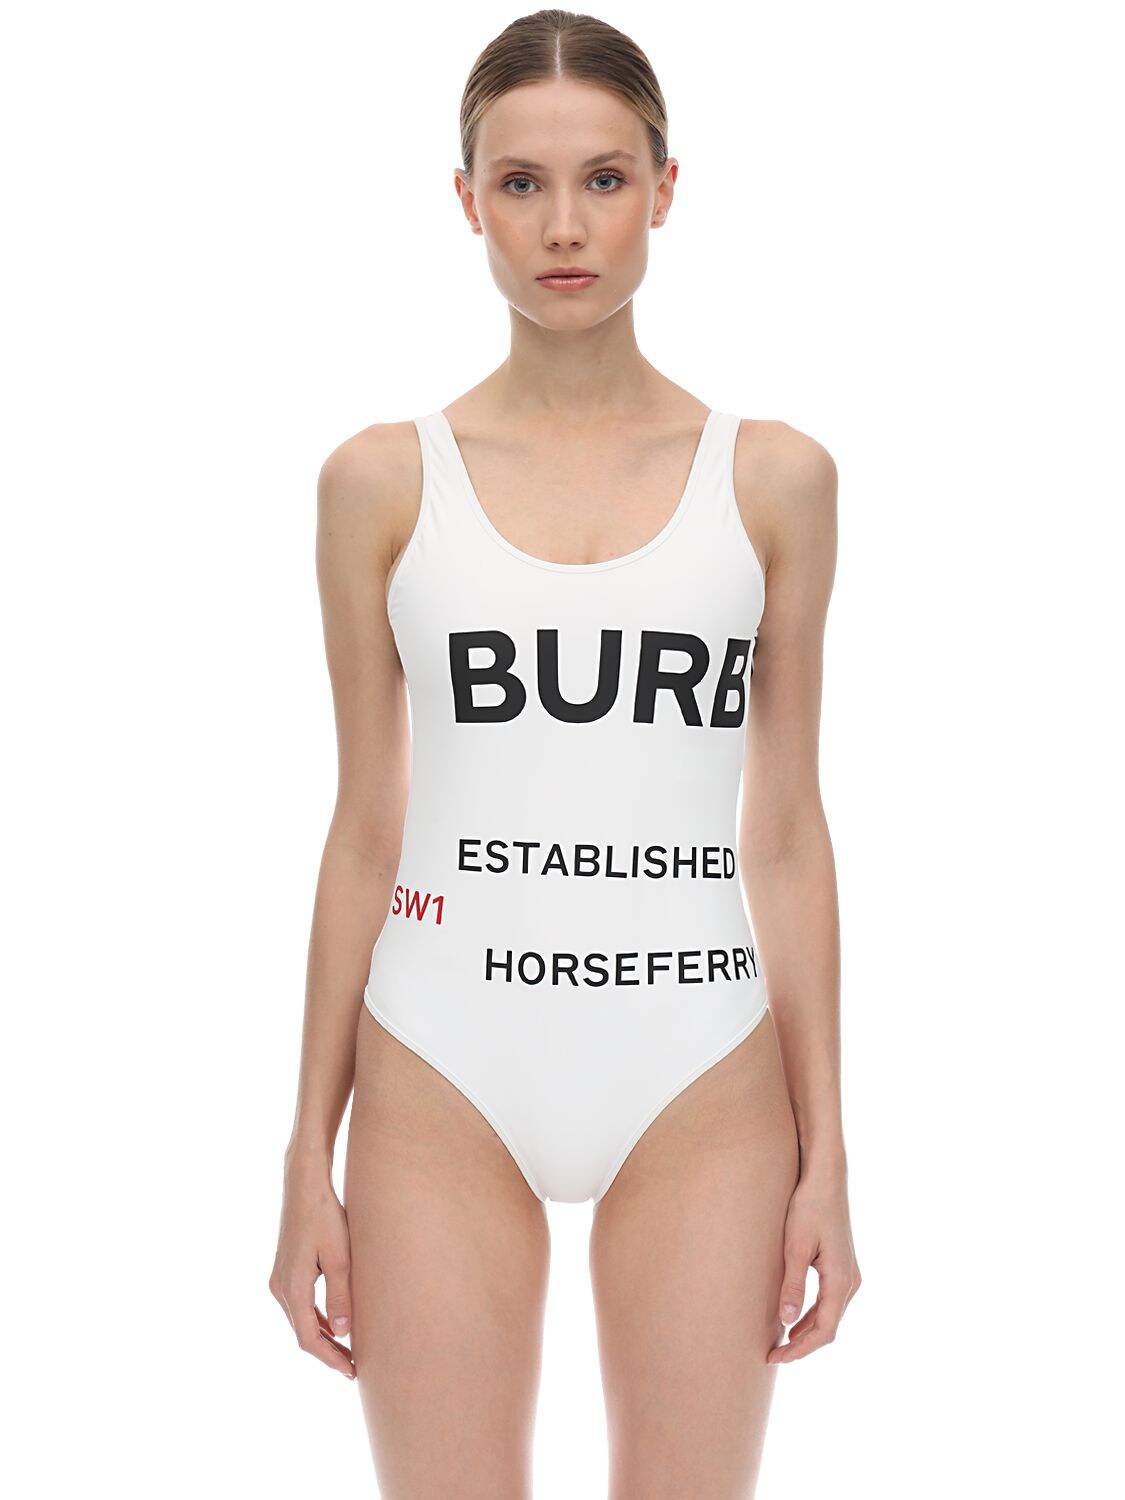 women's burberry one piece swimsuit